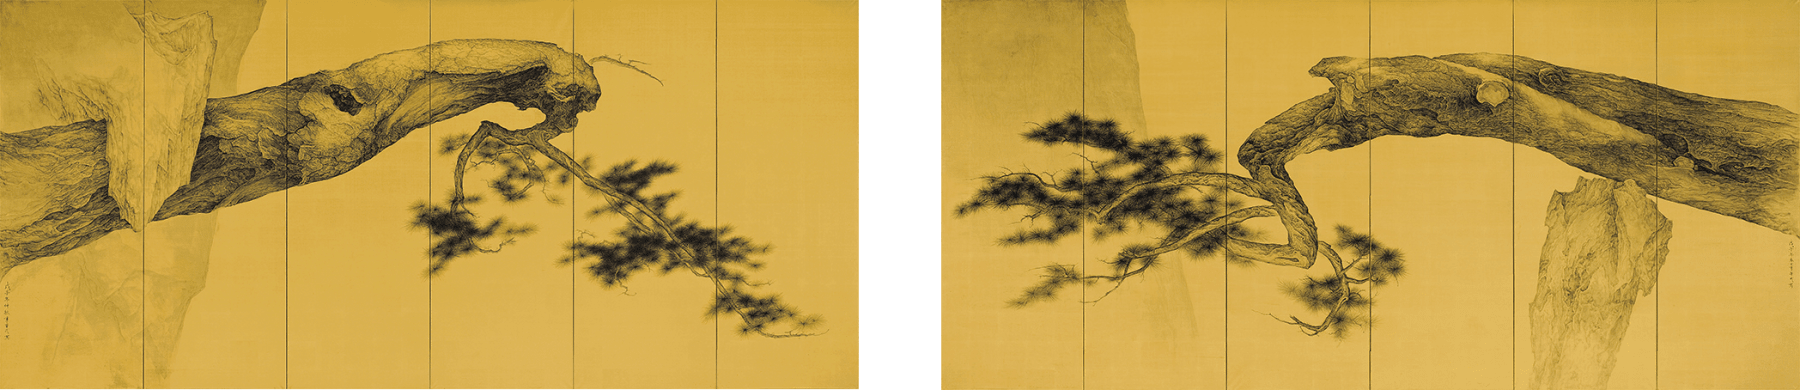 Li Huayi 李華弌, Branches of Pine with Rocks 《恣意縱橫》, 2008